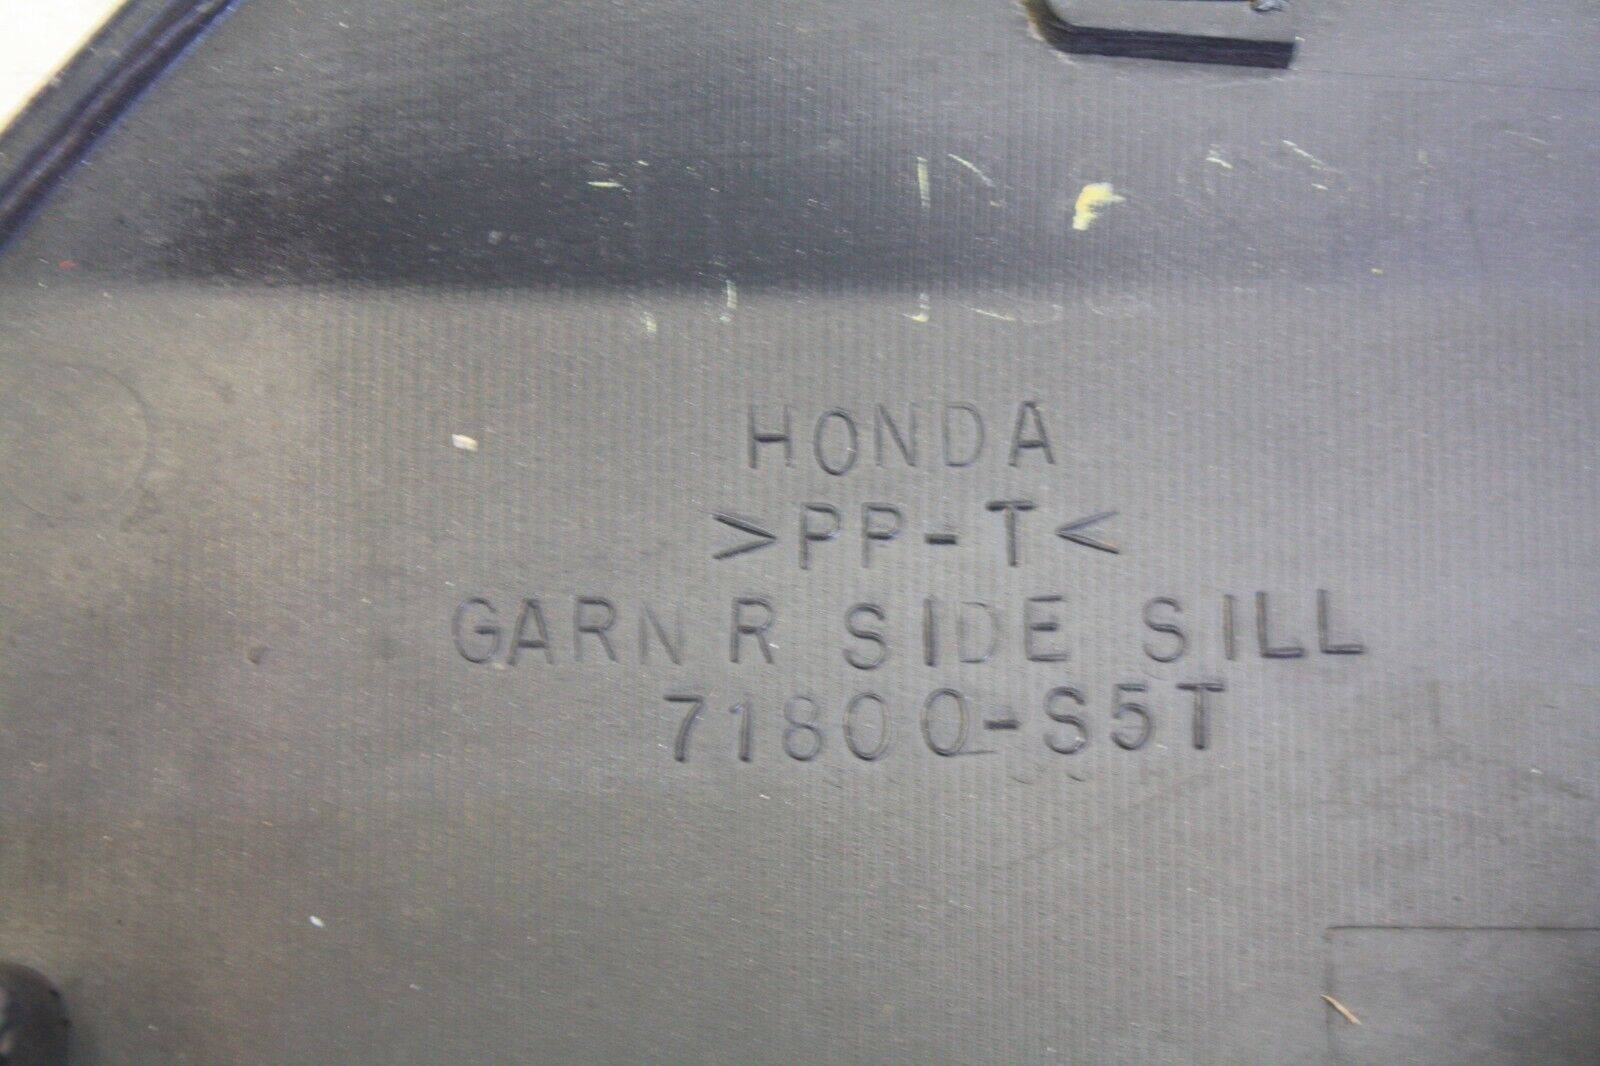 Honda-Civic-Type-R-Right-Side-Skirt-2001-TO-2005-71800-S5T-Genuine-176206412222-10